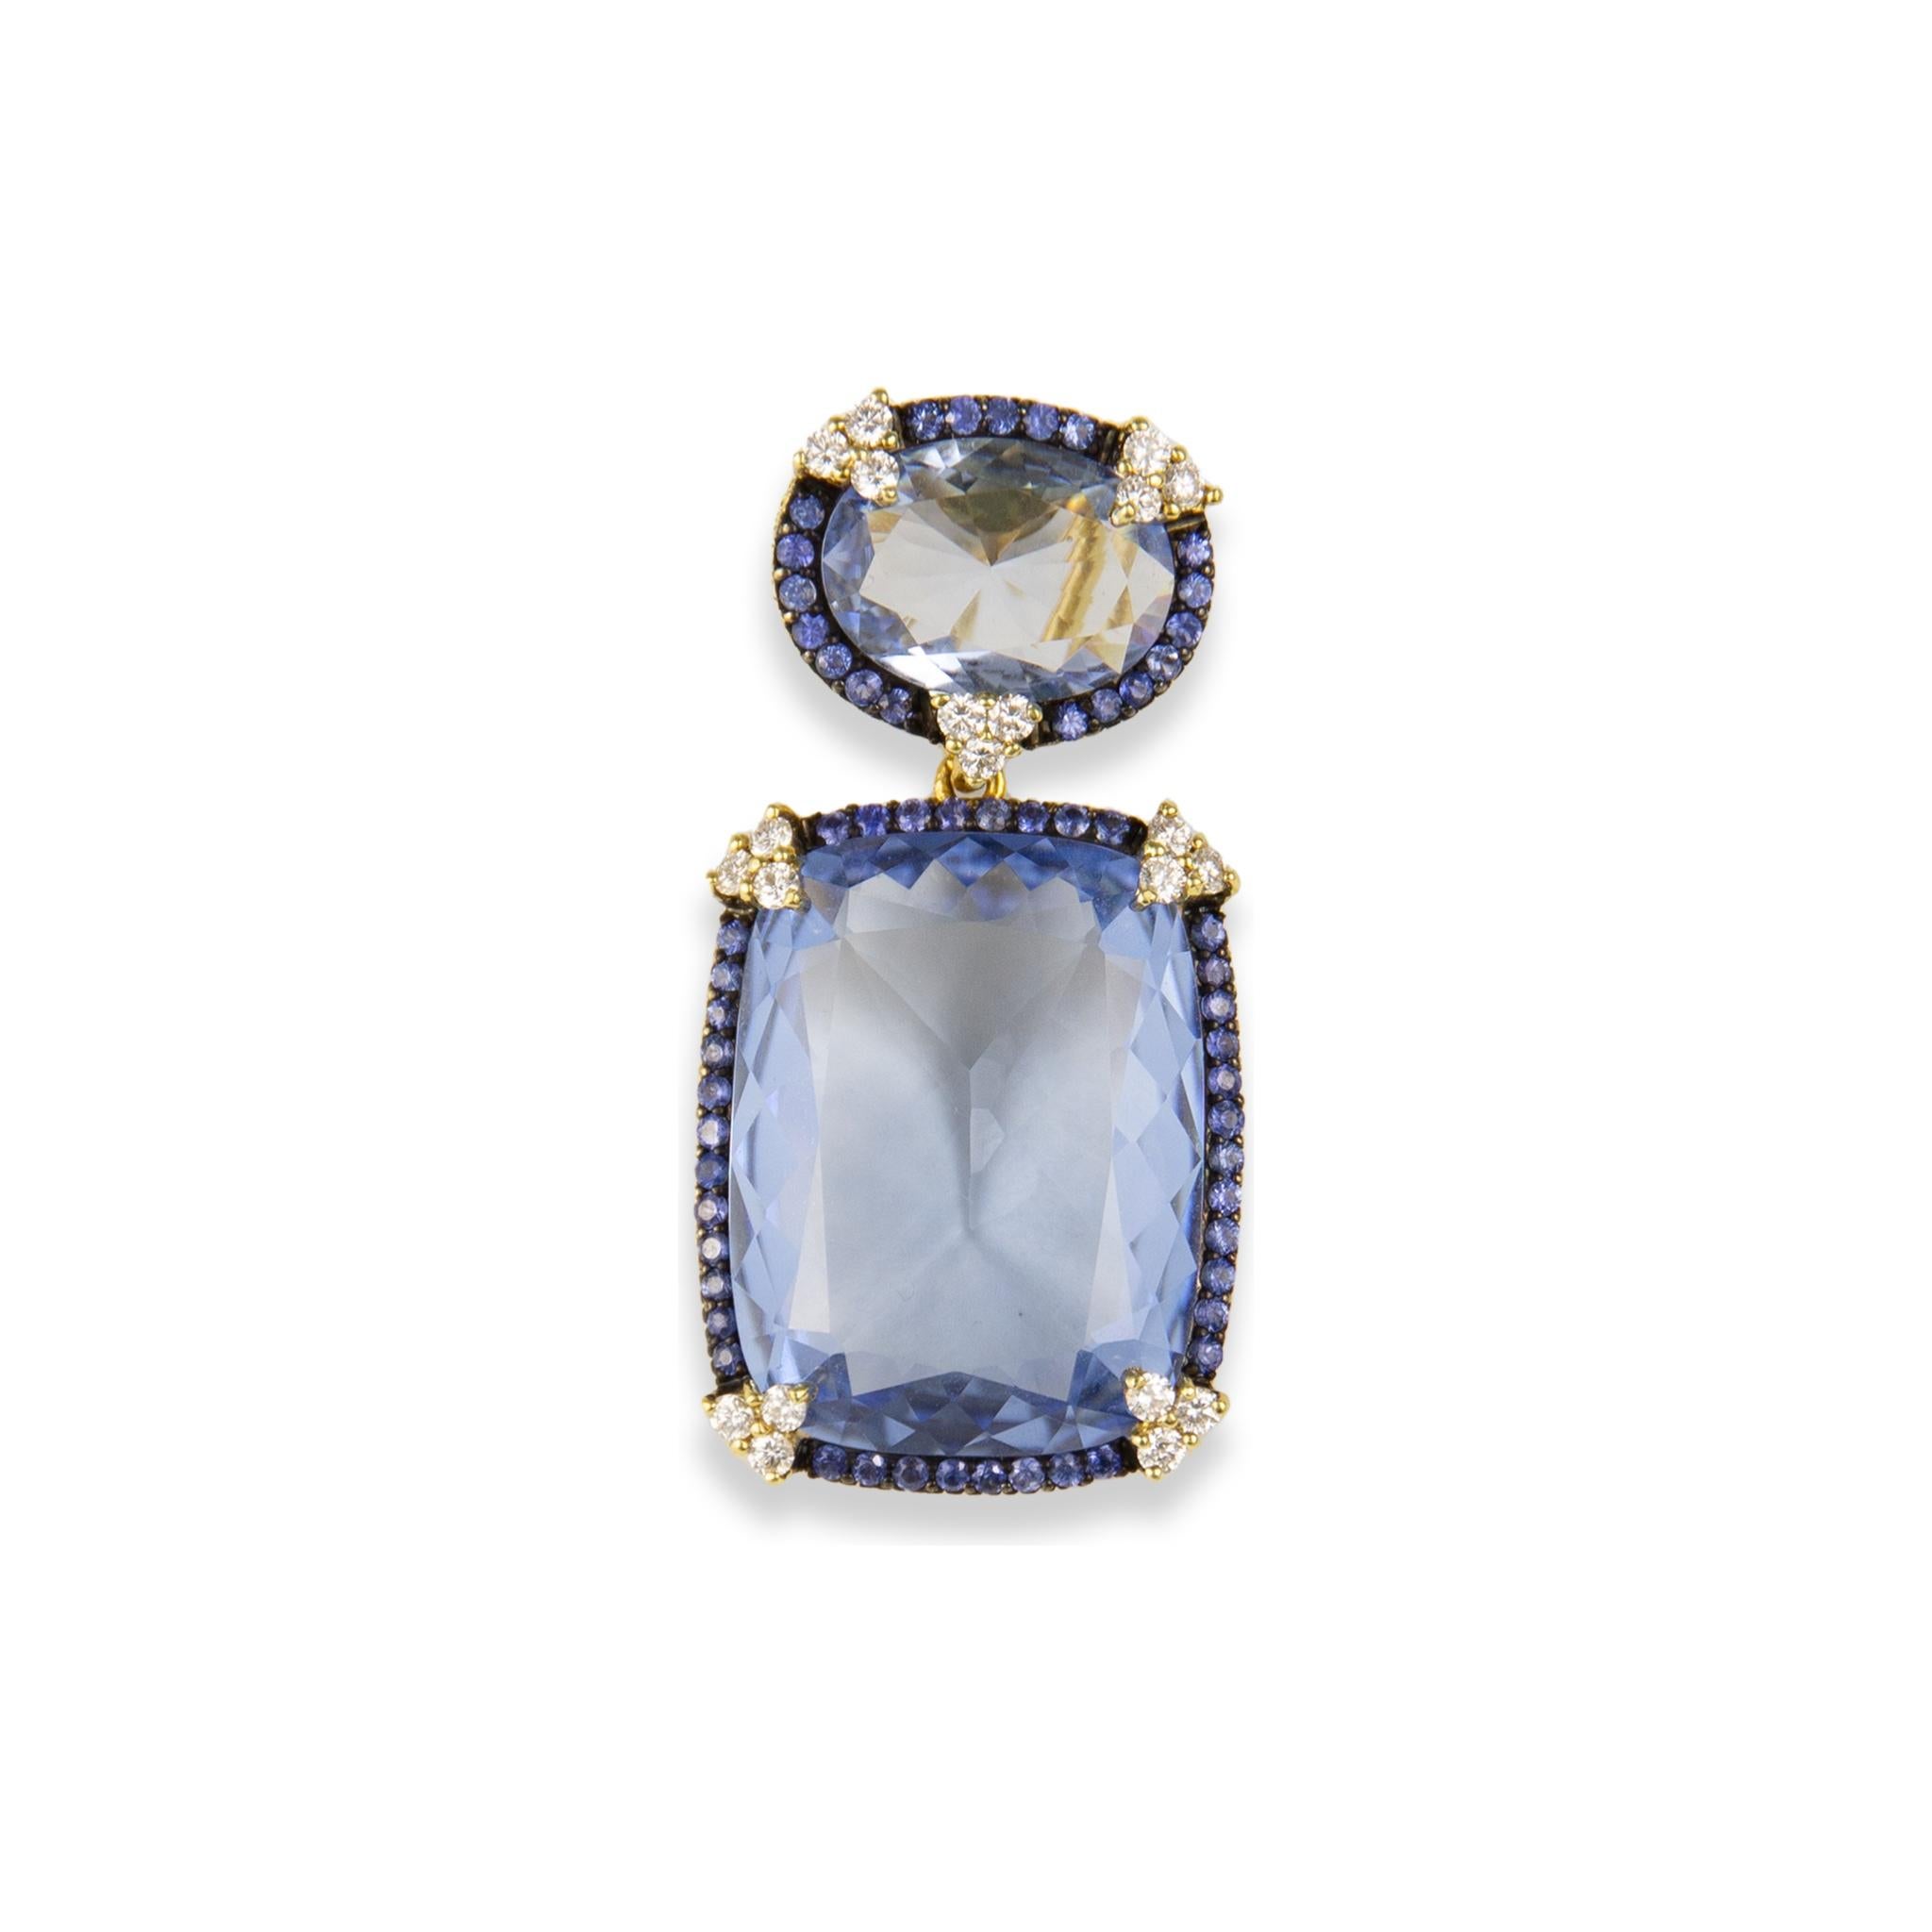 Judith Ripka 18K Yellow Gold Earrings
Blue Quartz & Sapphires & Diamonds
SKU: JR01061
Retail price: $11,520.00